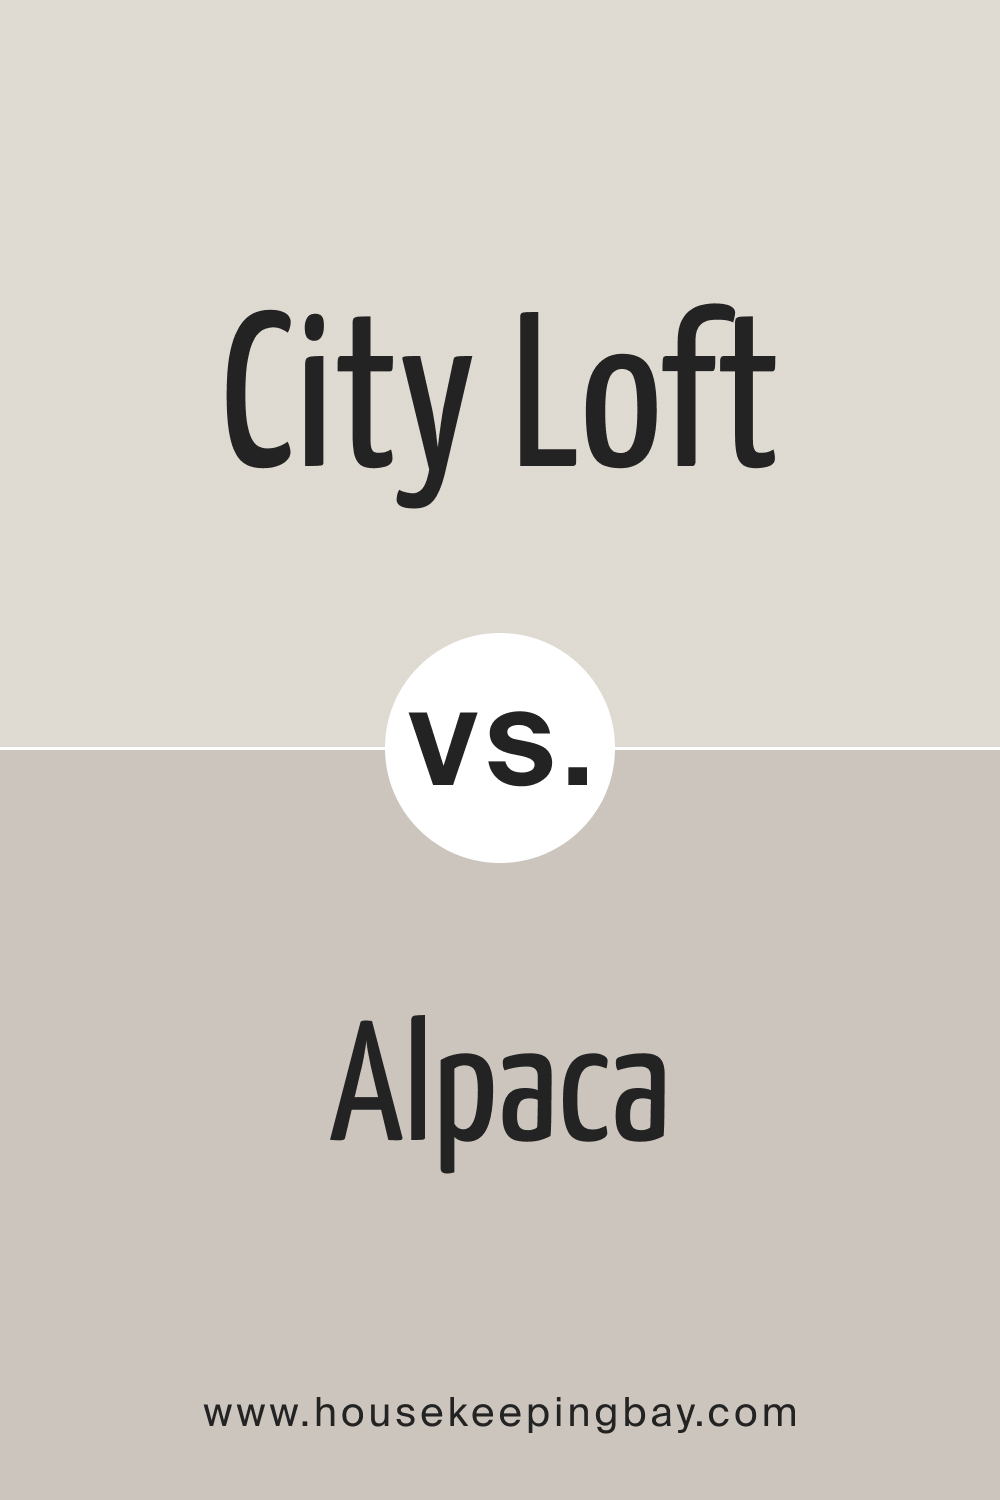 City Loft vs Alpaca